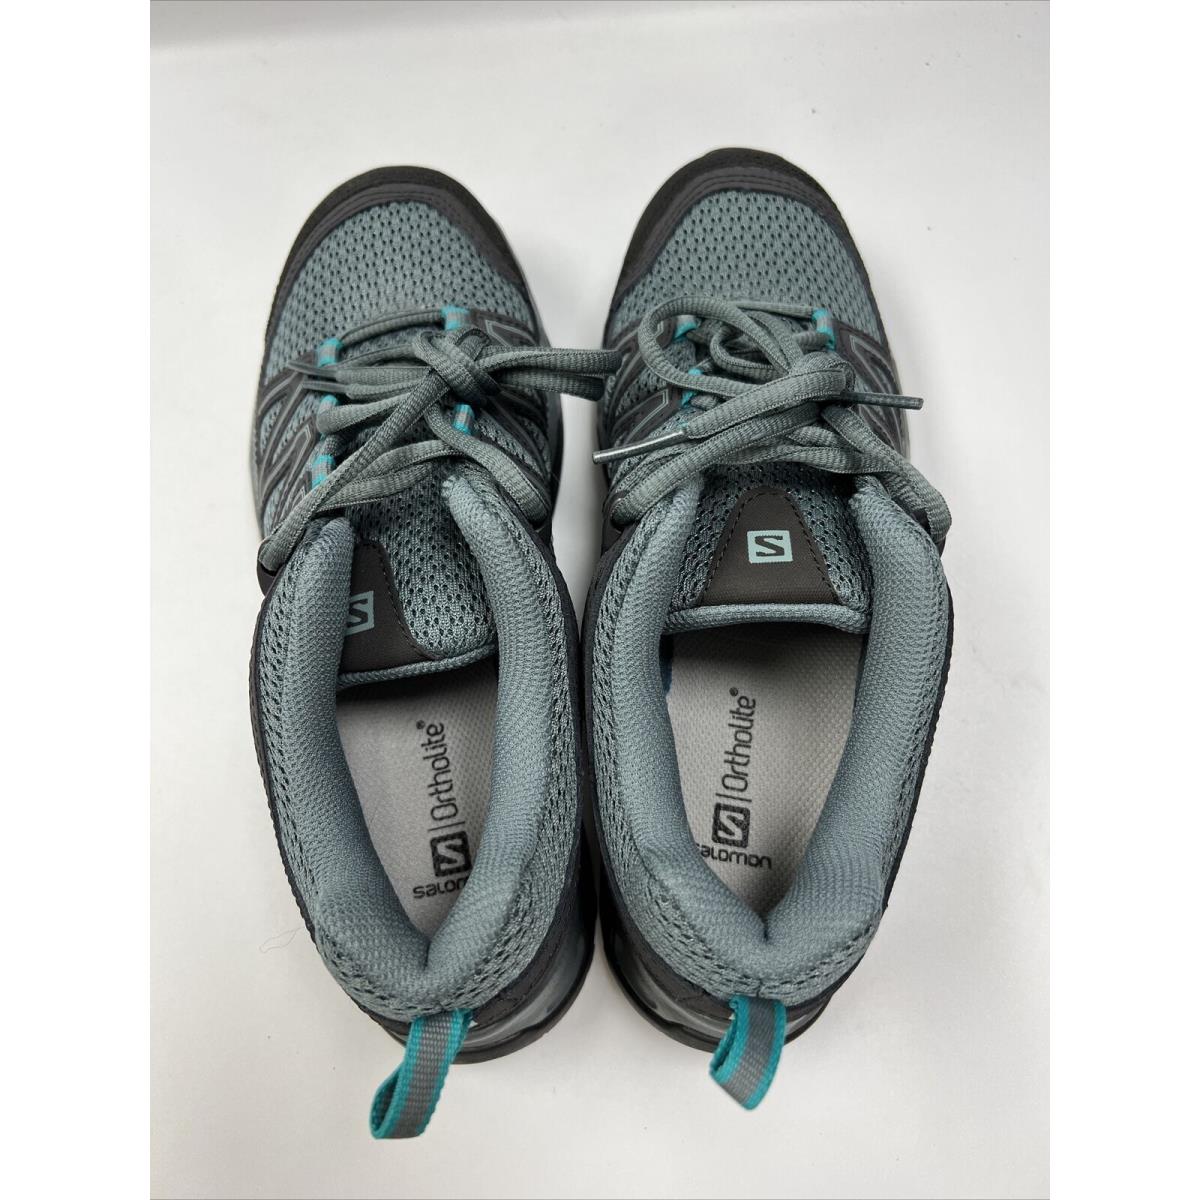 Salomon shoes Hiking - Gray 2